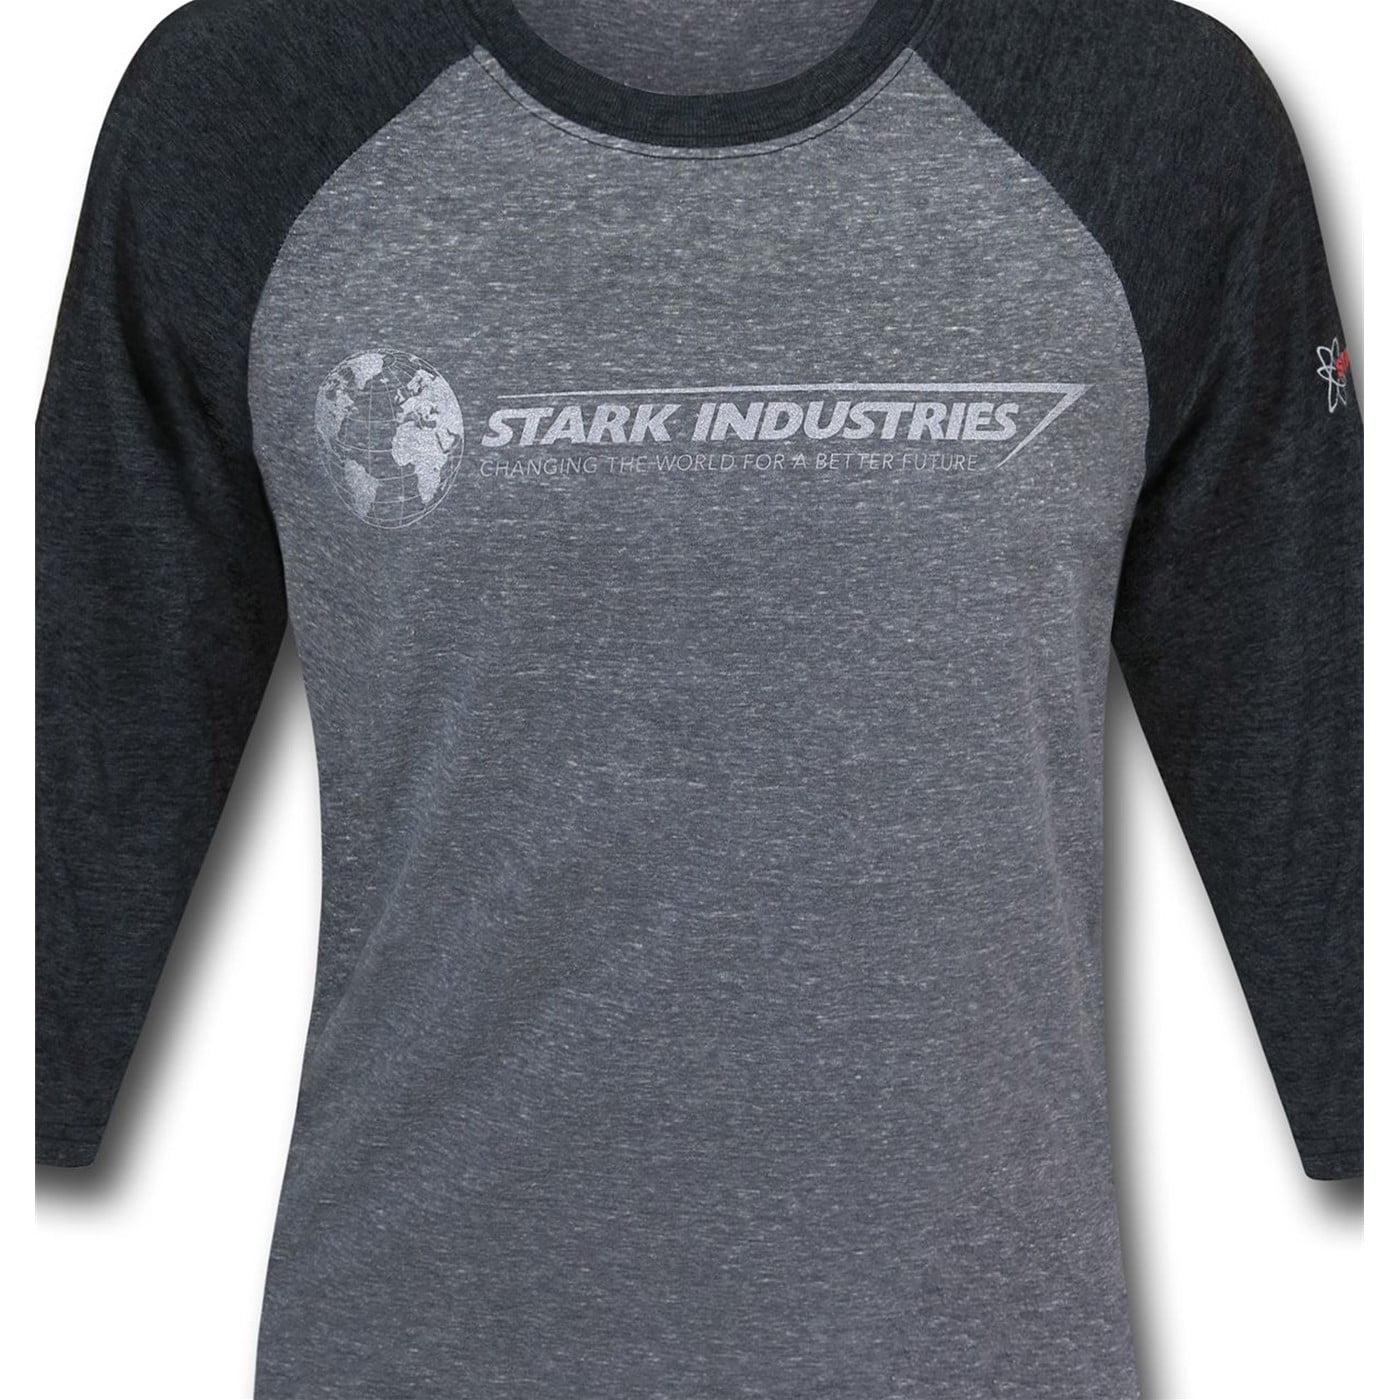 Iron Man Stark Industries Expo Men's Baseball T-Shirt Charcoal